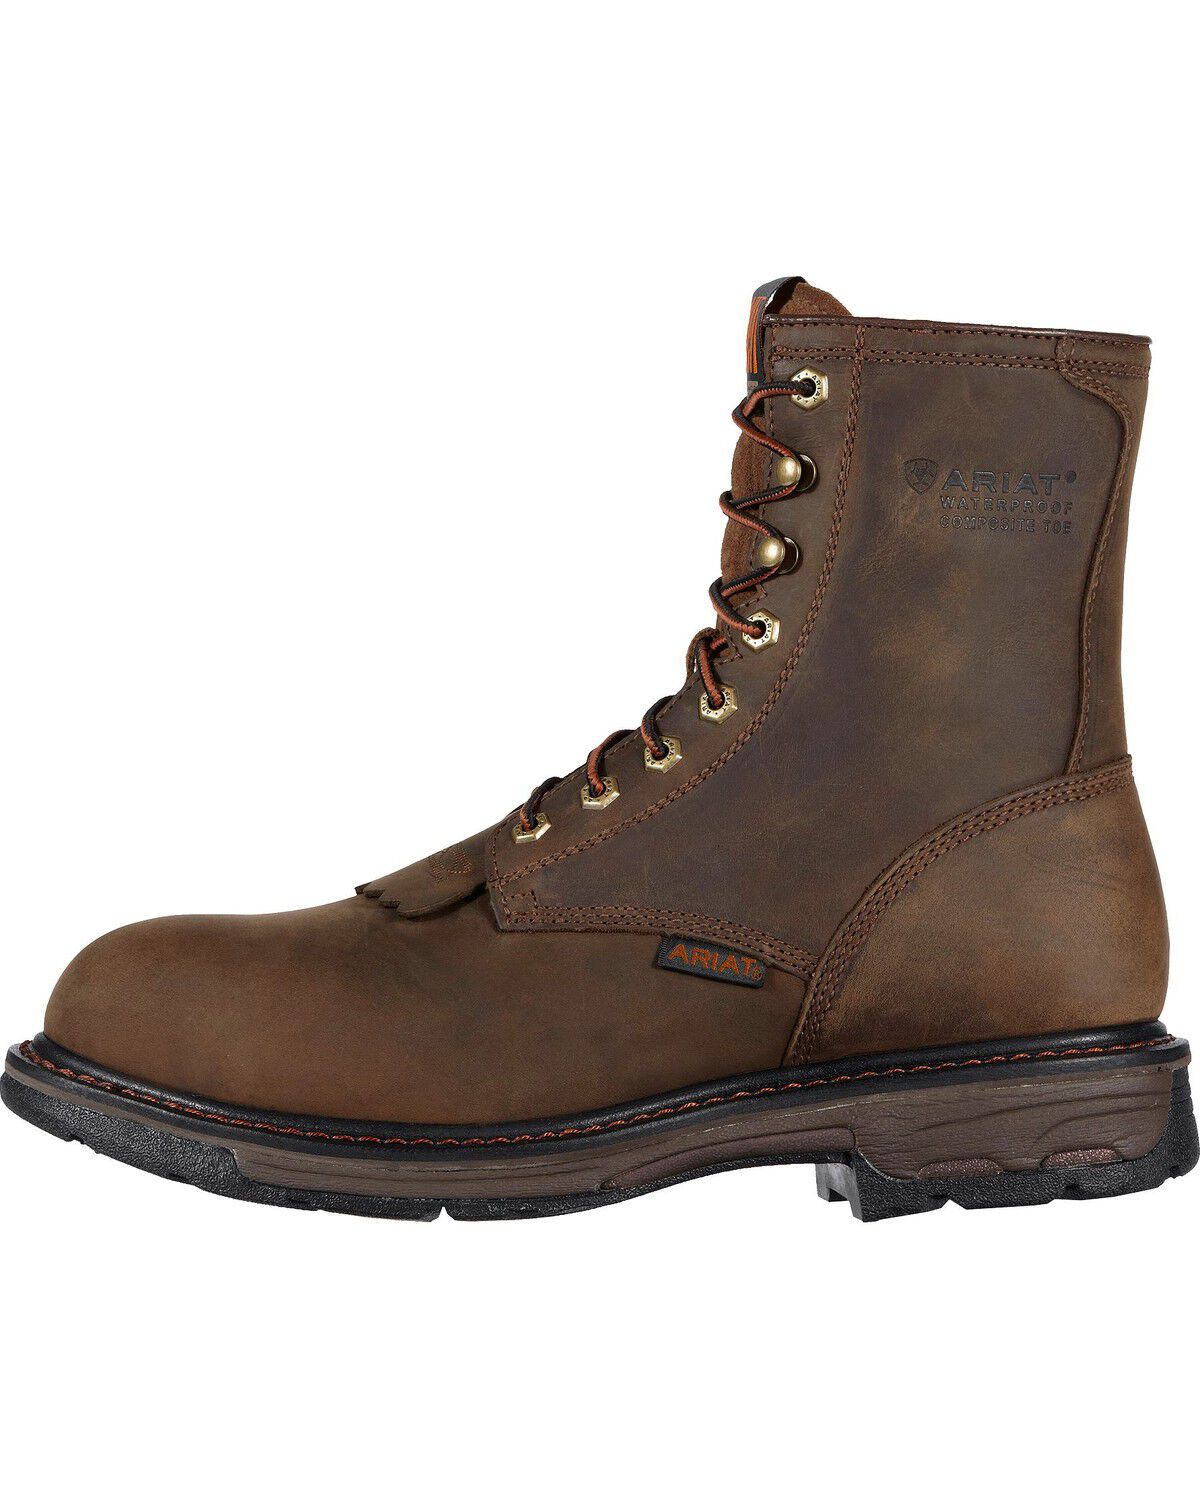 men's ariat work boots sale